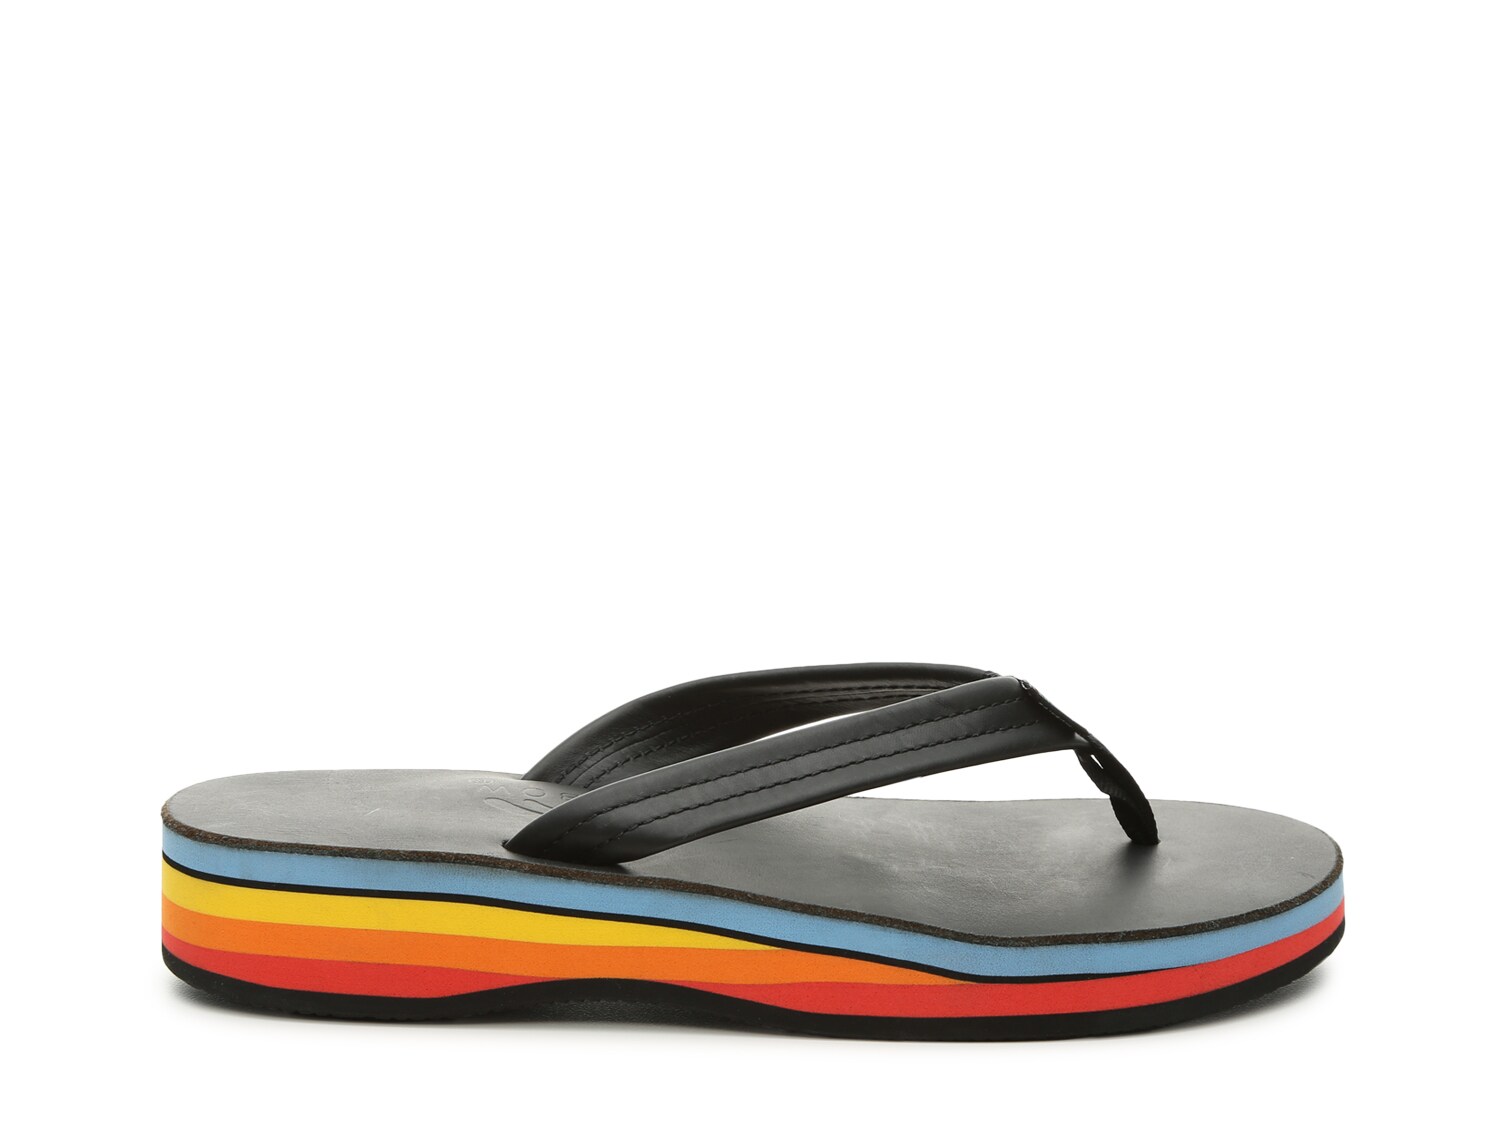 rainbow wedge thong sandal